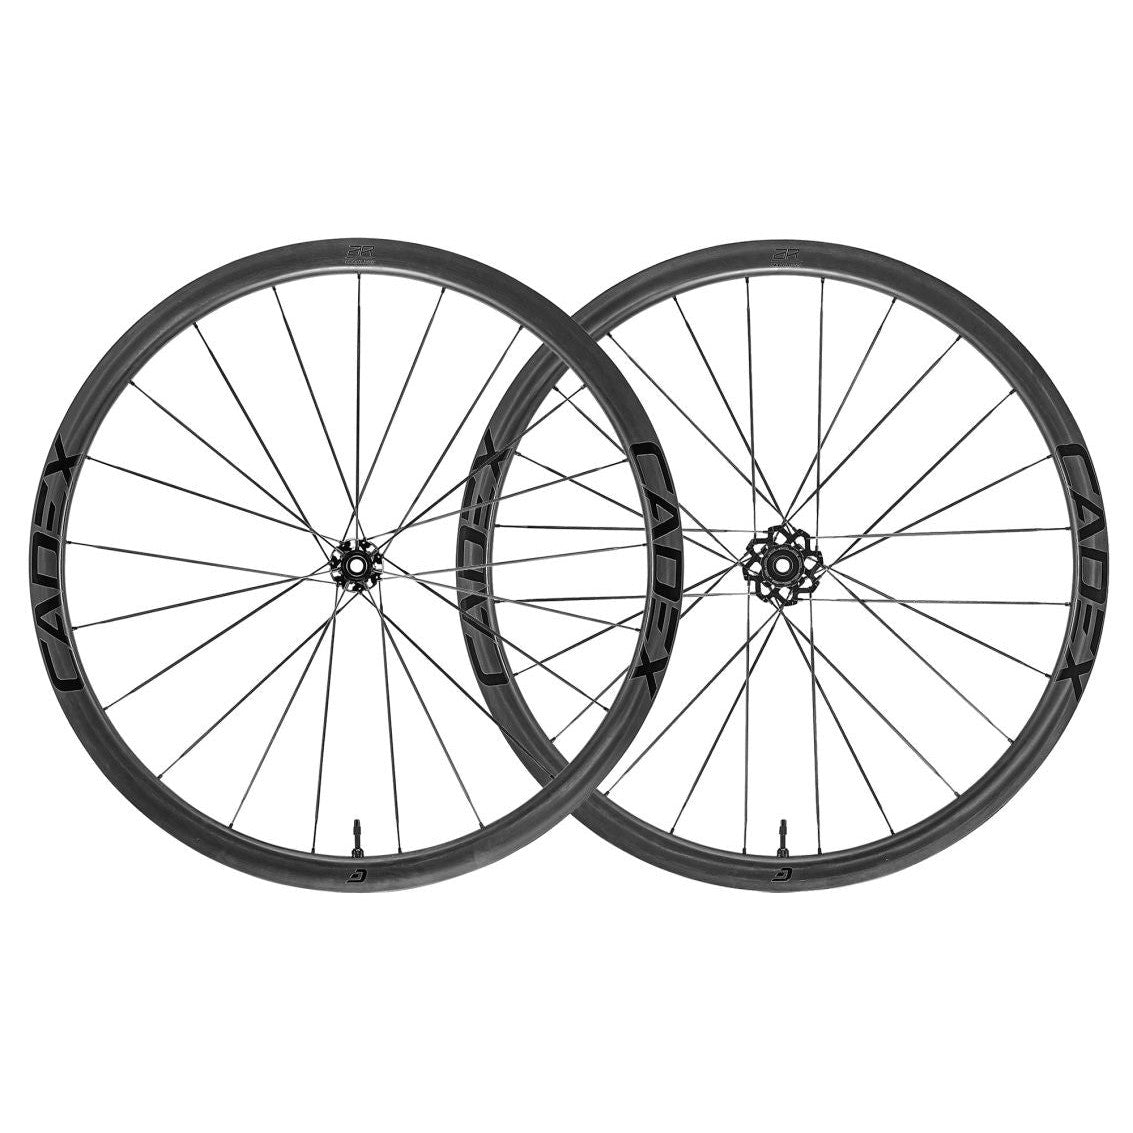 Cadex AR 35 Tubeless Disc Brake 700c Carbon Wheel - Wheels - Bicycle Warehouse